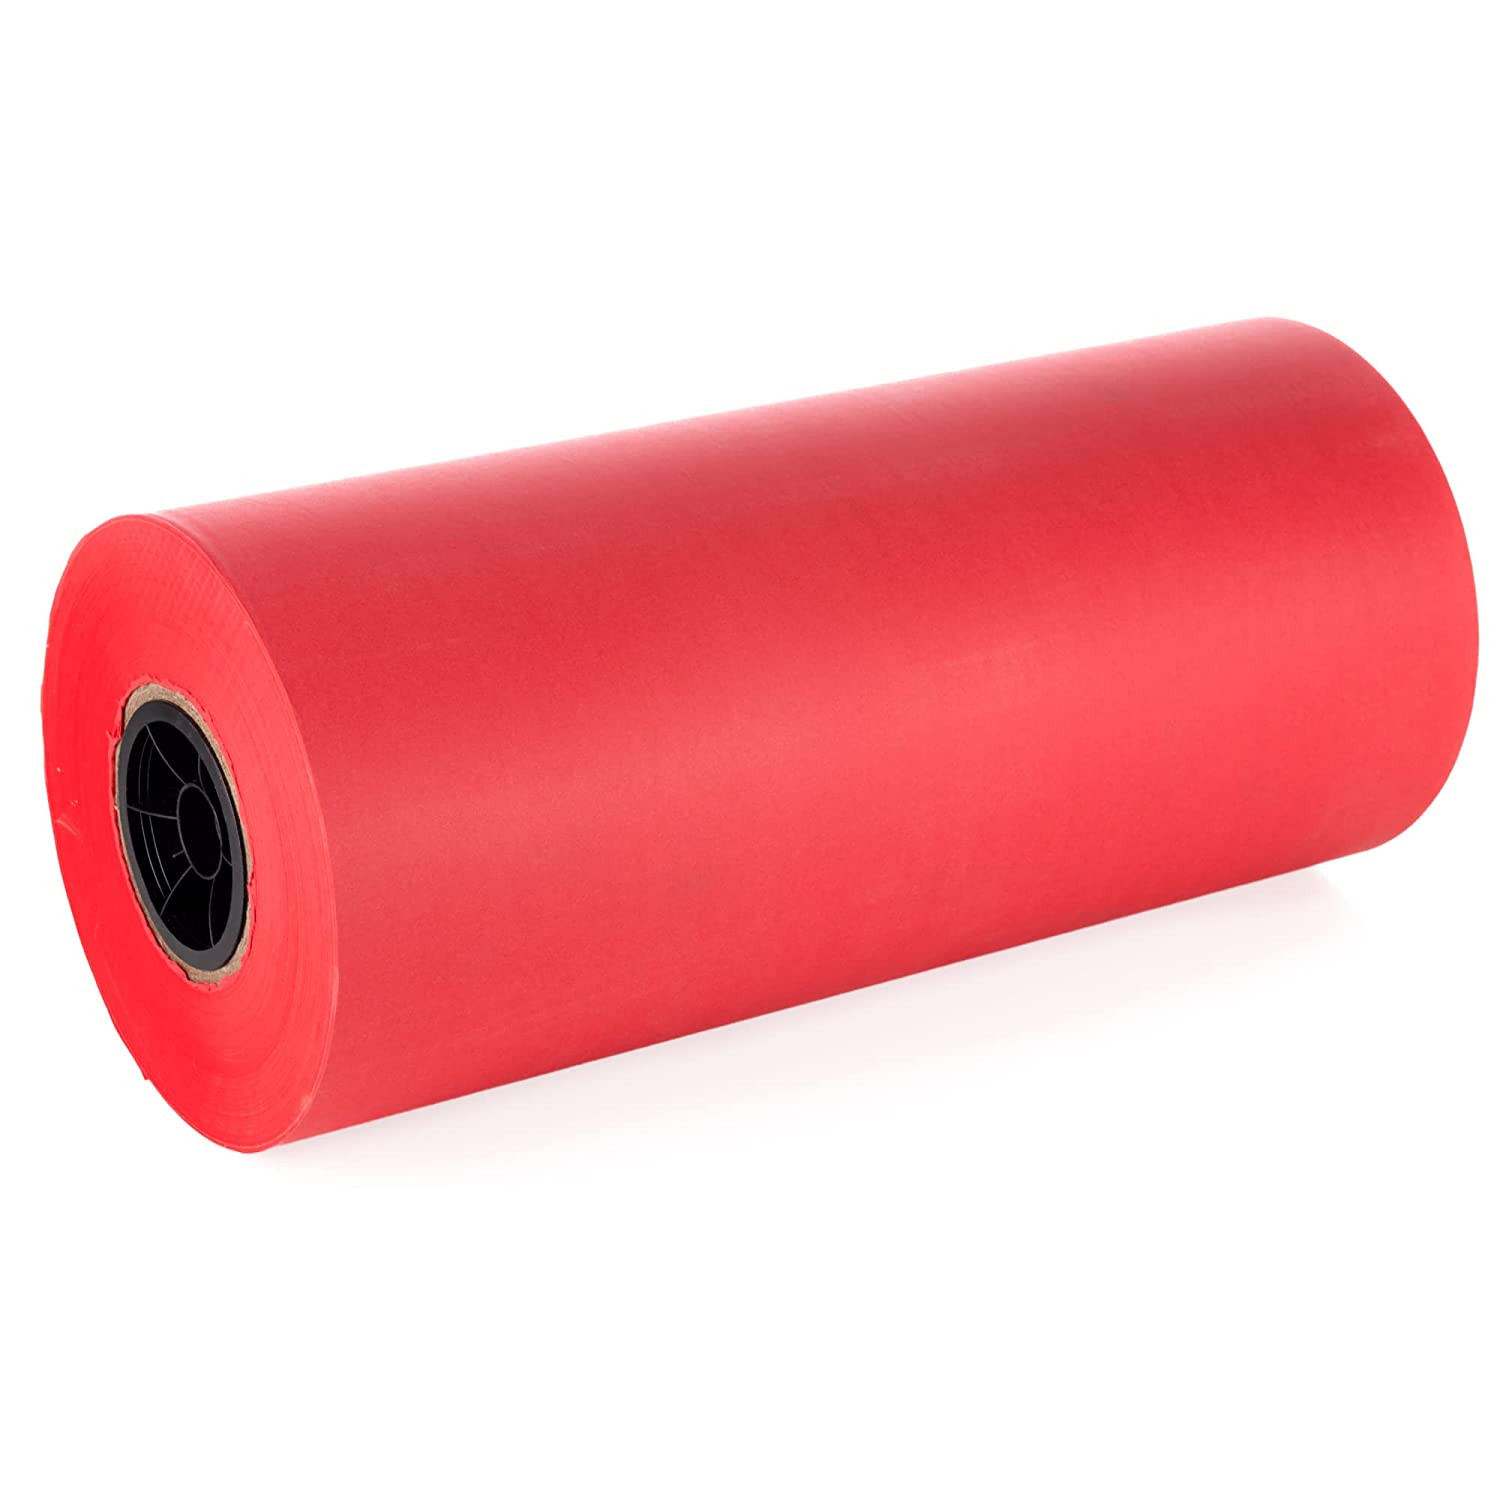 18 x 1800' SatinPack™ Tissue Paper Roll, 20 lbs, Black buy in stock in  U.S. in IDL Packaging